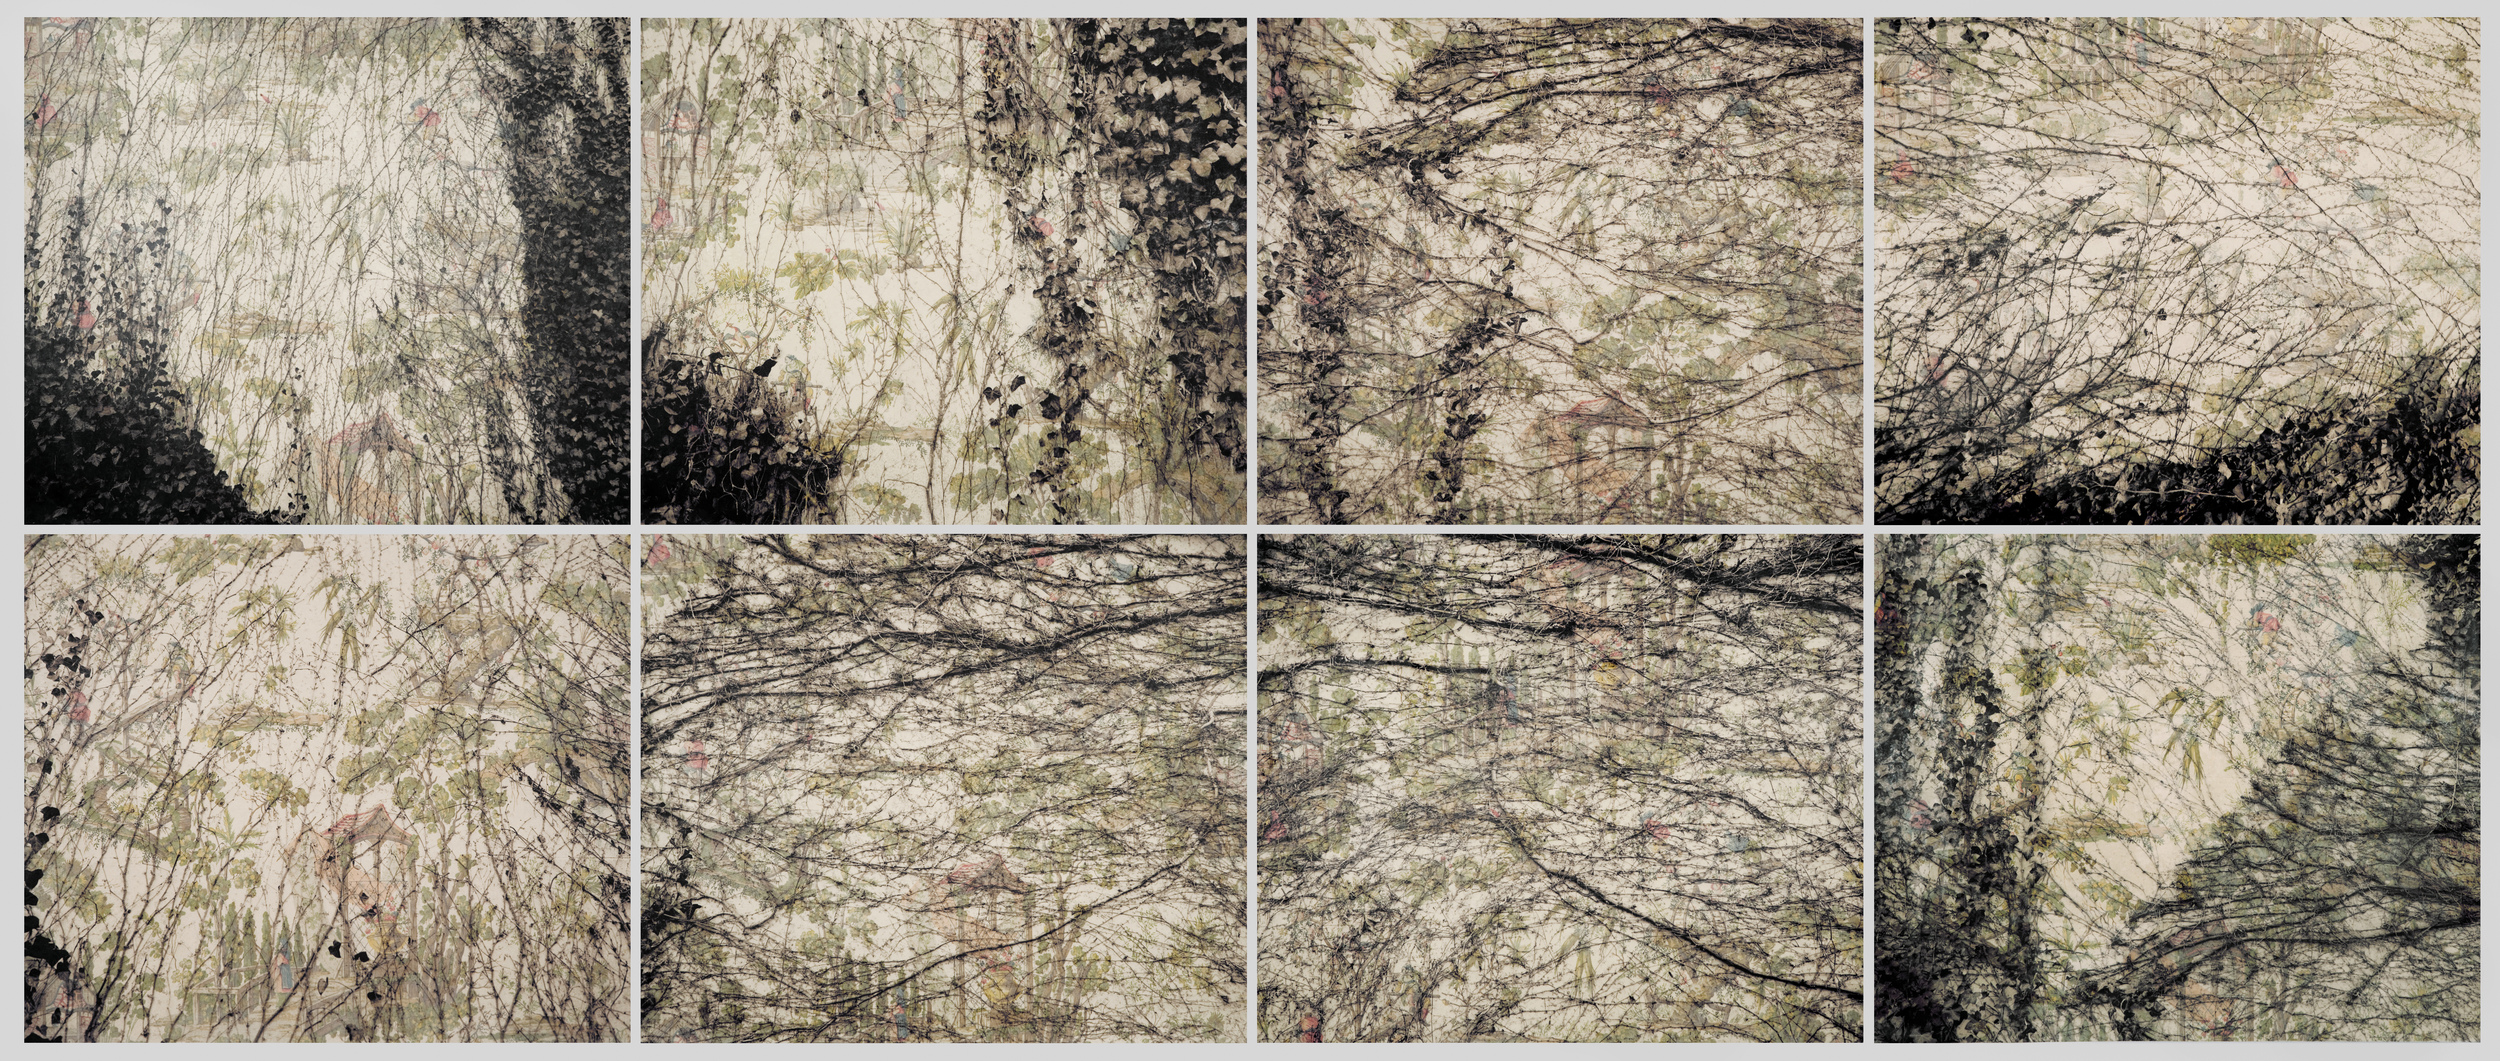    Met Vines Grid, &nbsp;2010   Archival&nbsp;pigment print on kozo shi, wallpaper, wax, 8 -&nbsp;22” X 26"   52.5" X 89.5"  